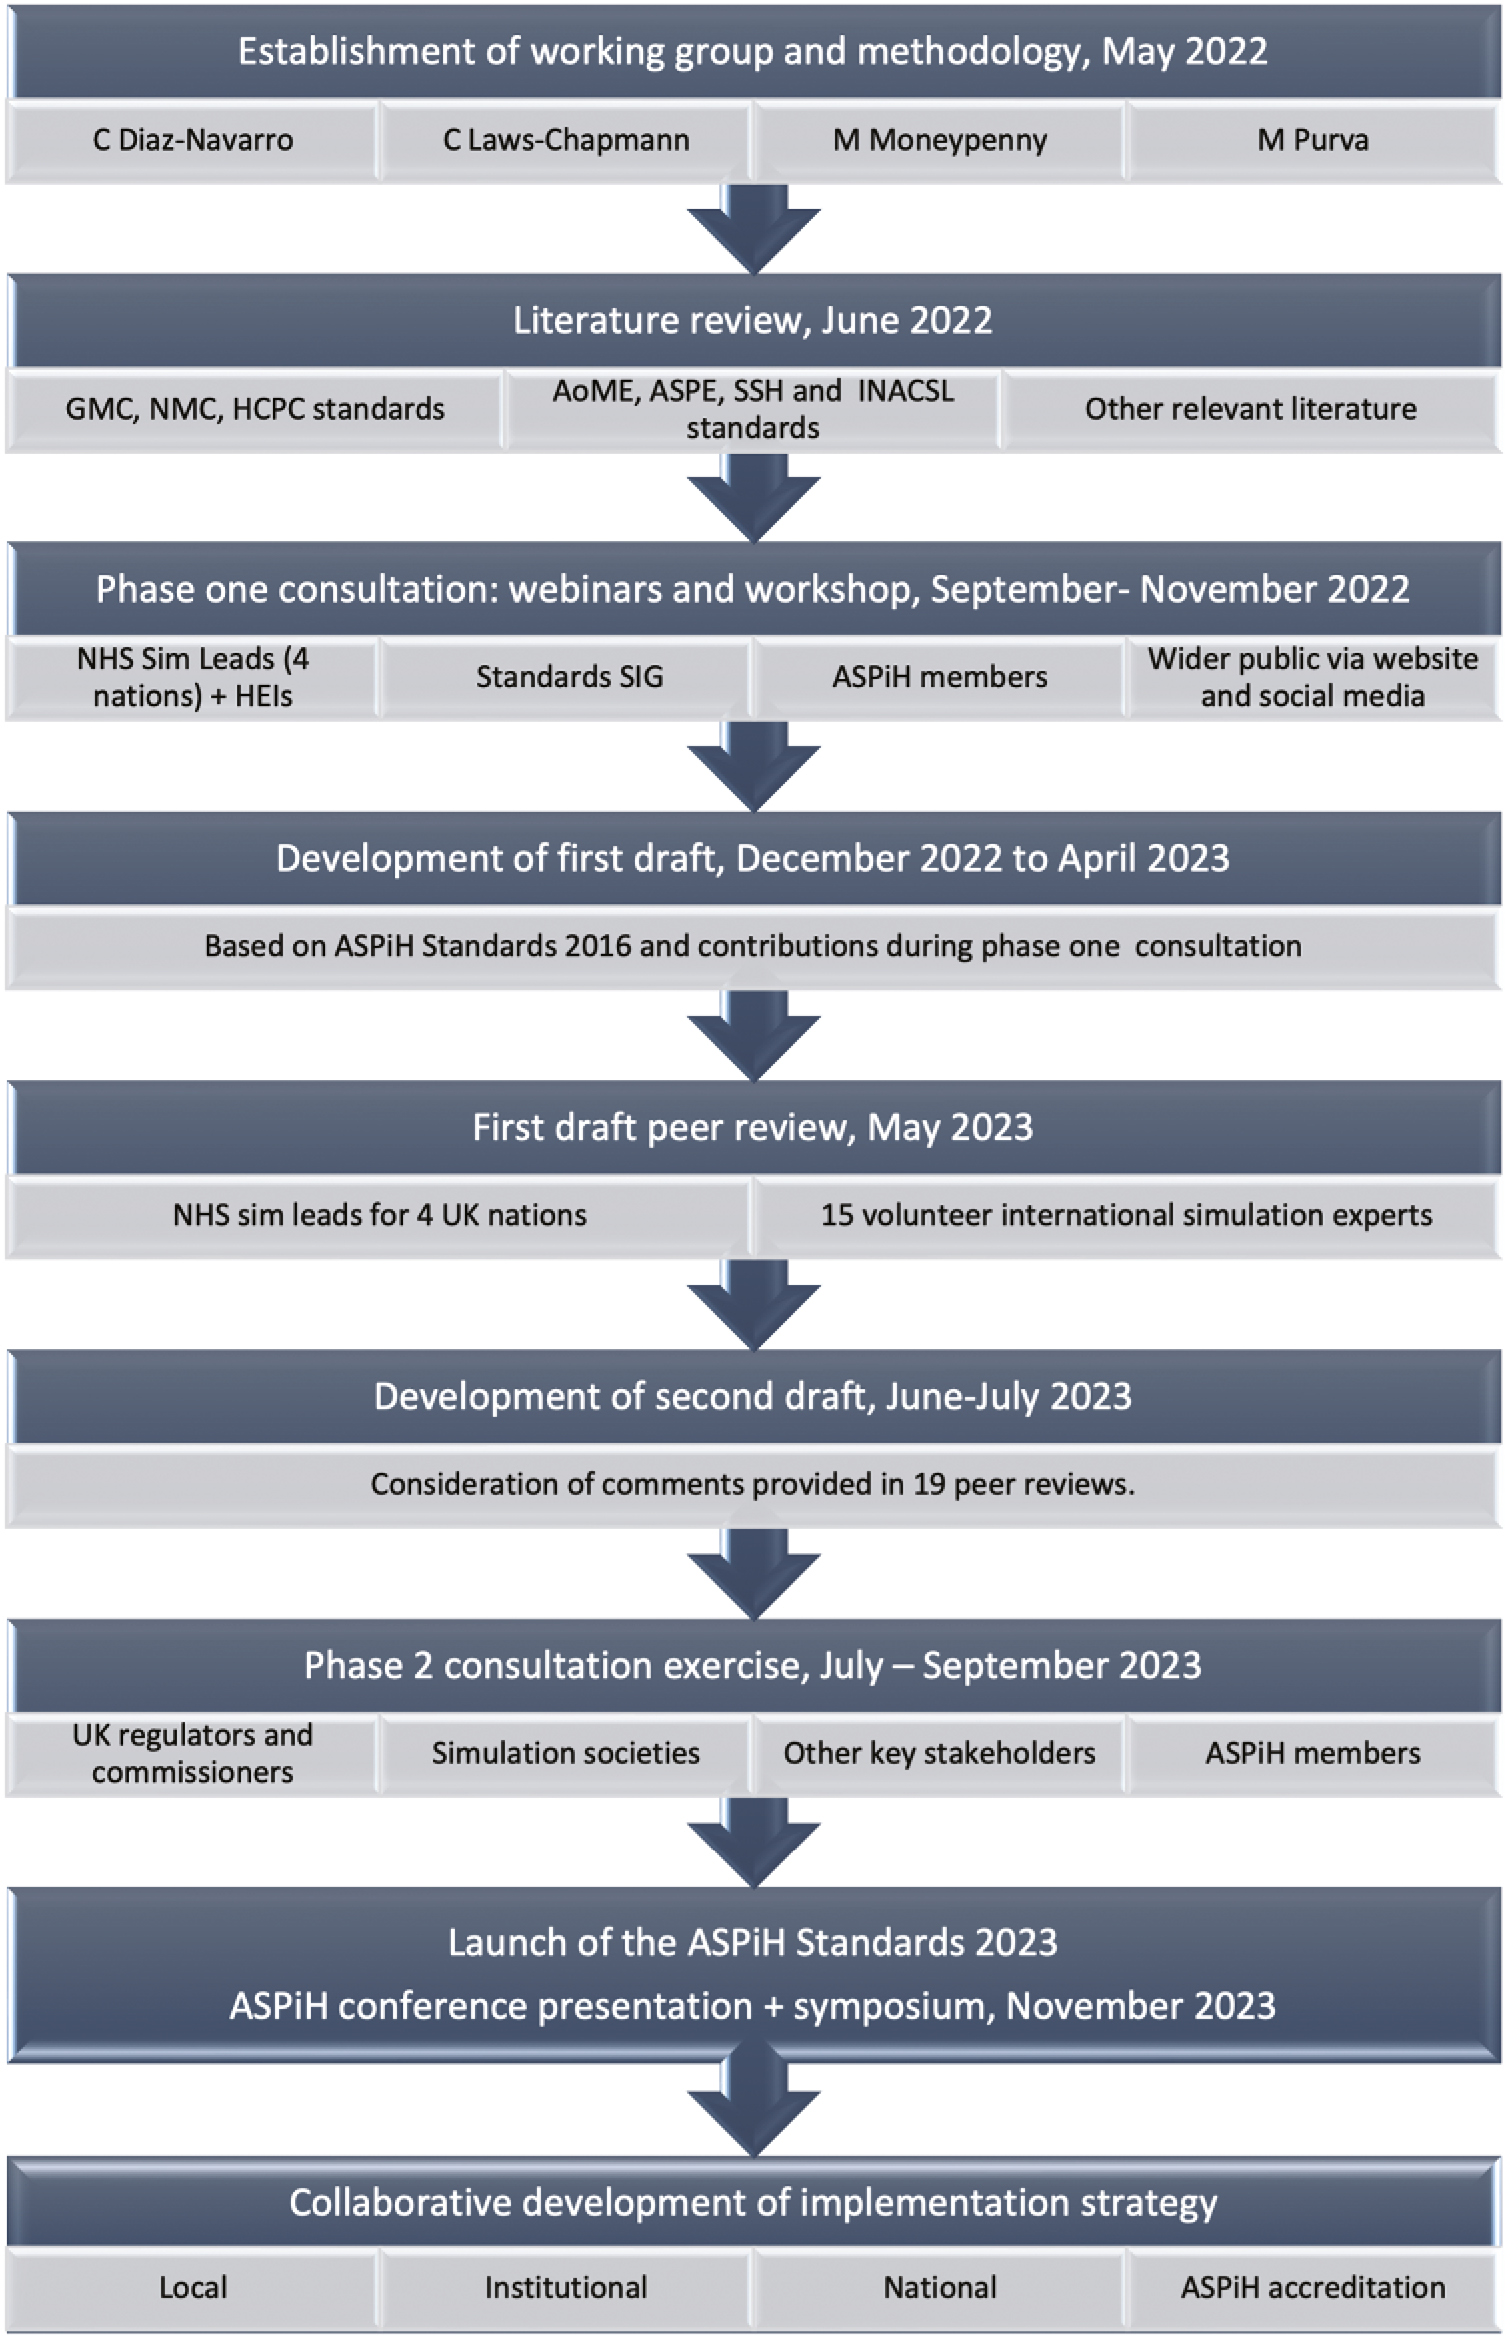 Development process for the ASPiH Standards 2023.